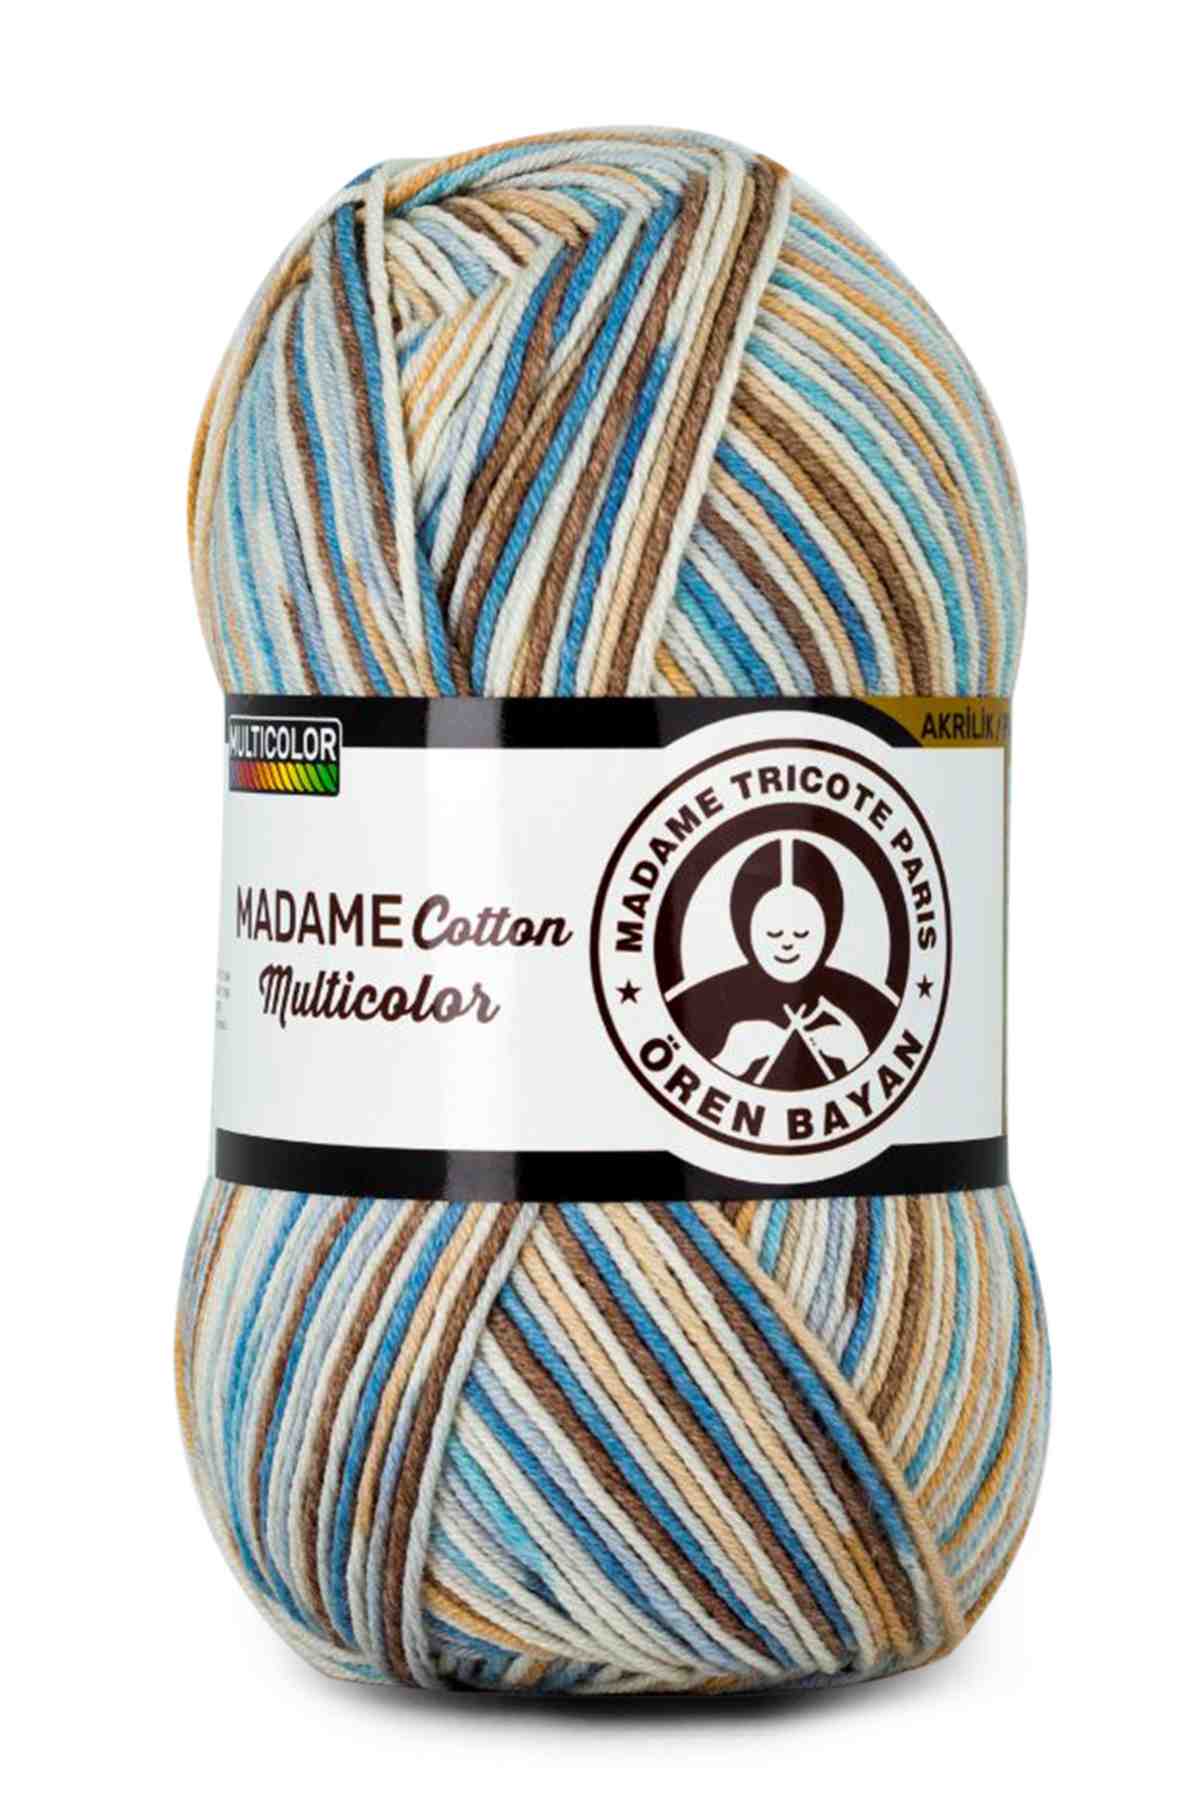 Madame Tricote Paris Madame Cotton Multicolor Cotton Yarn